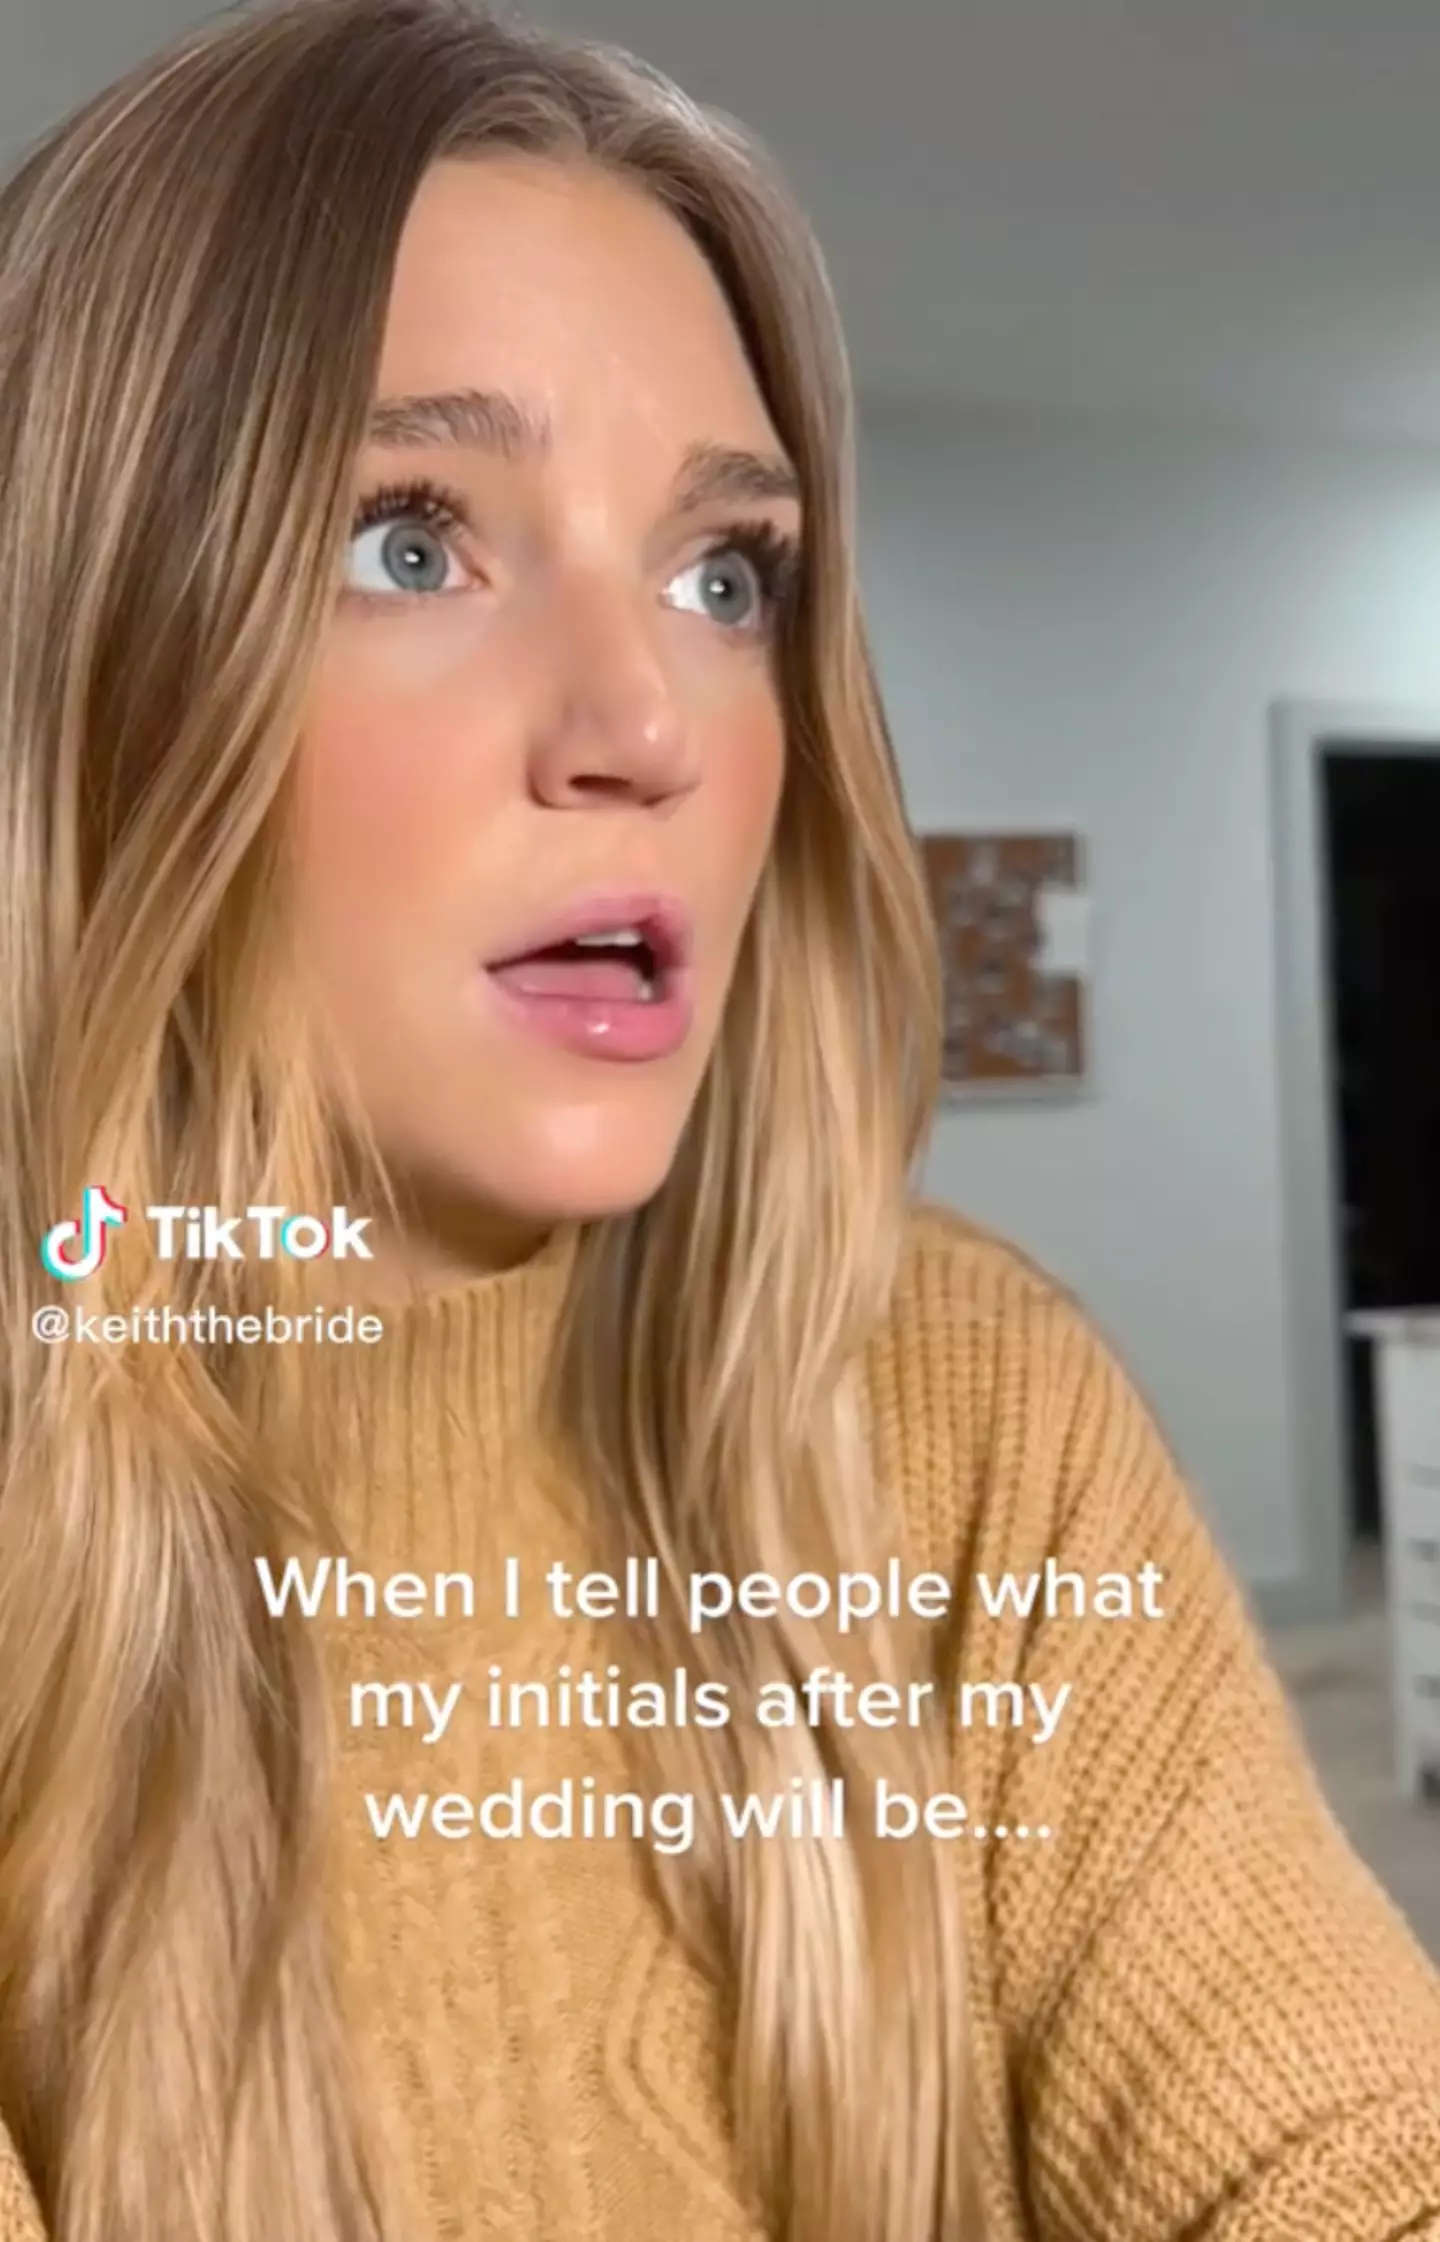 Kathryn shared her unbelievable problem on TikTok.